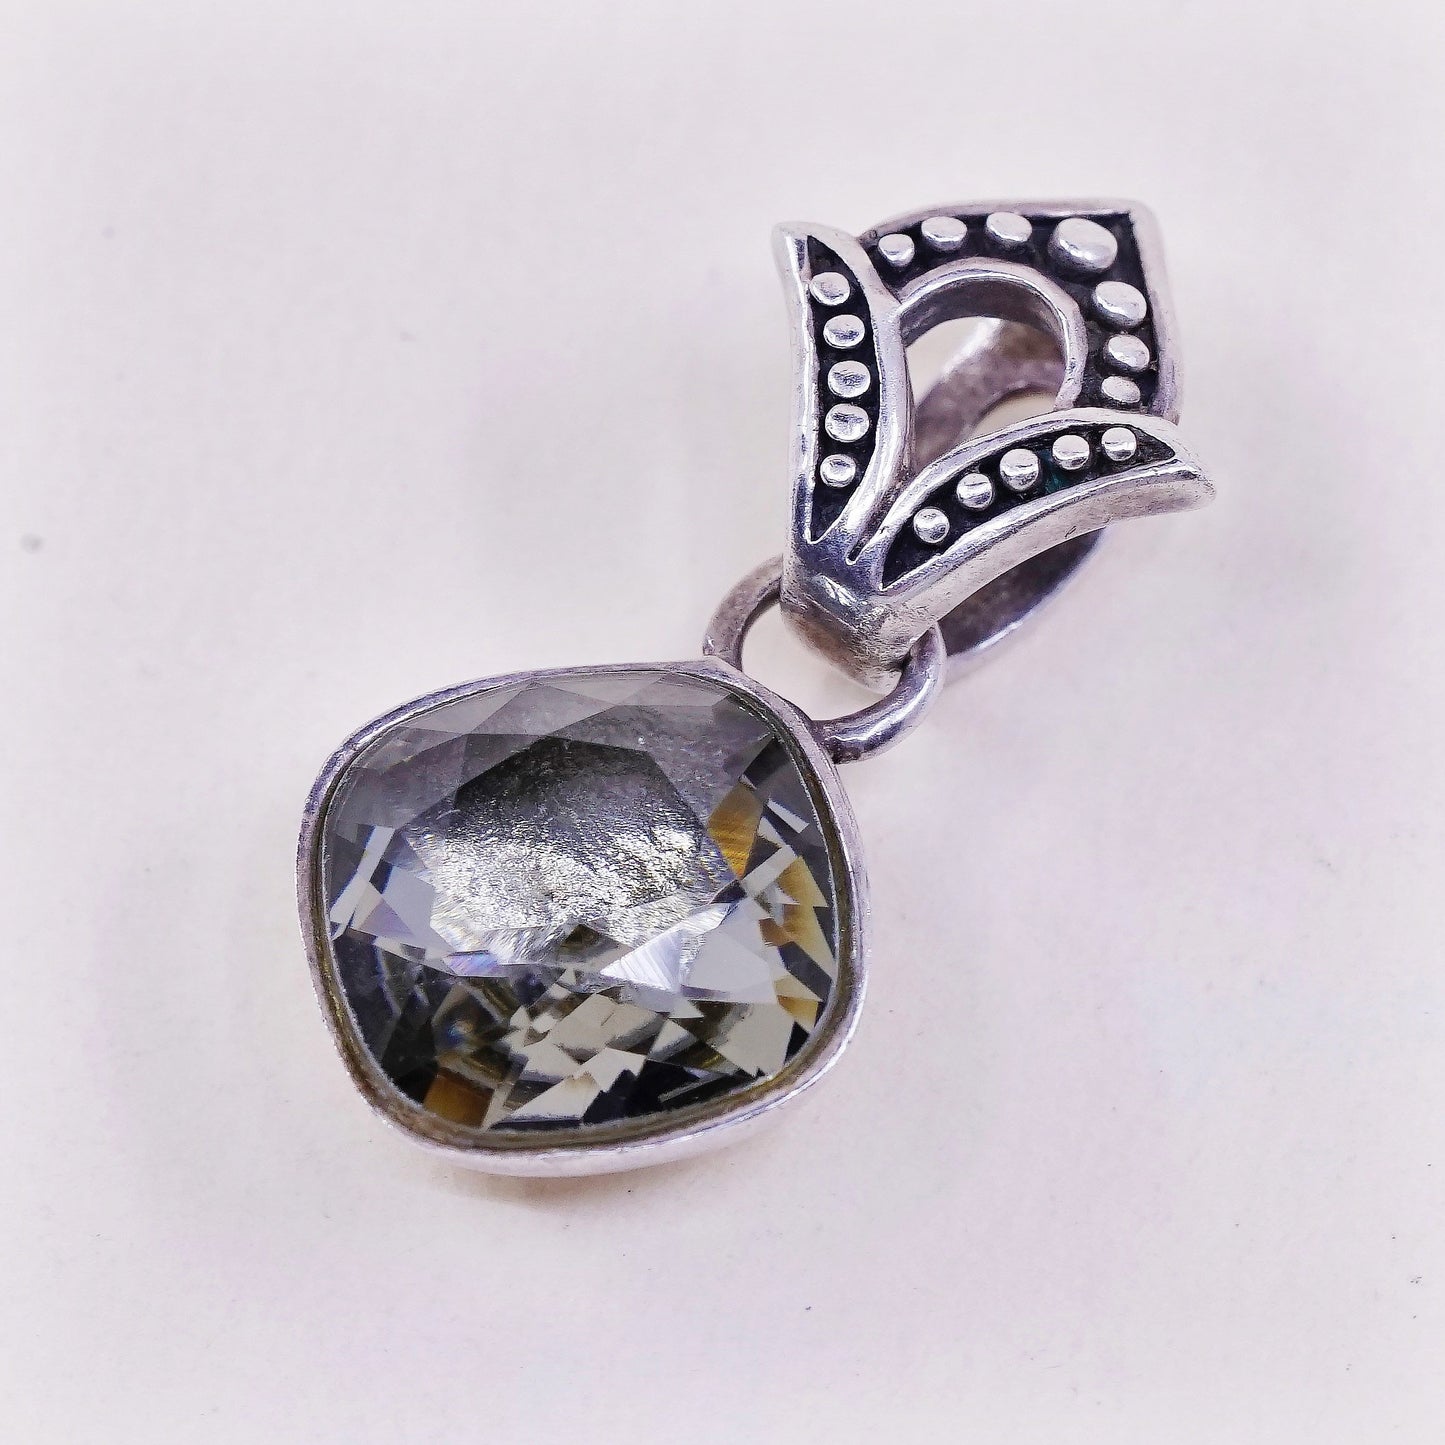 VTG Barse sterling silver handmade pendant, 925 with cushion cut topaz pendant